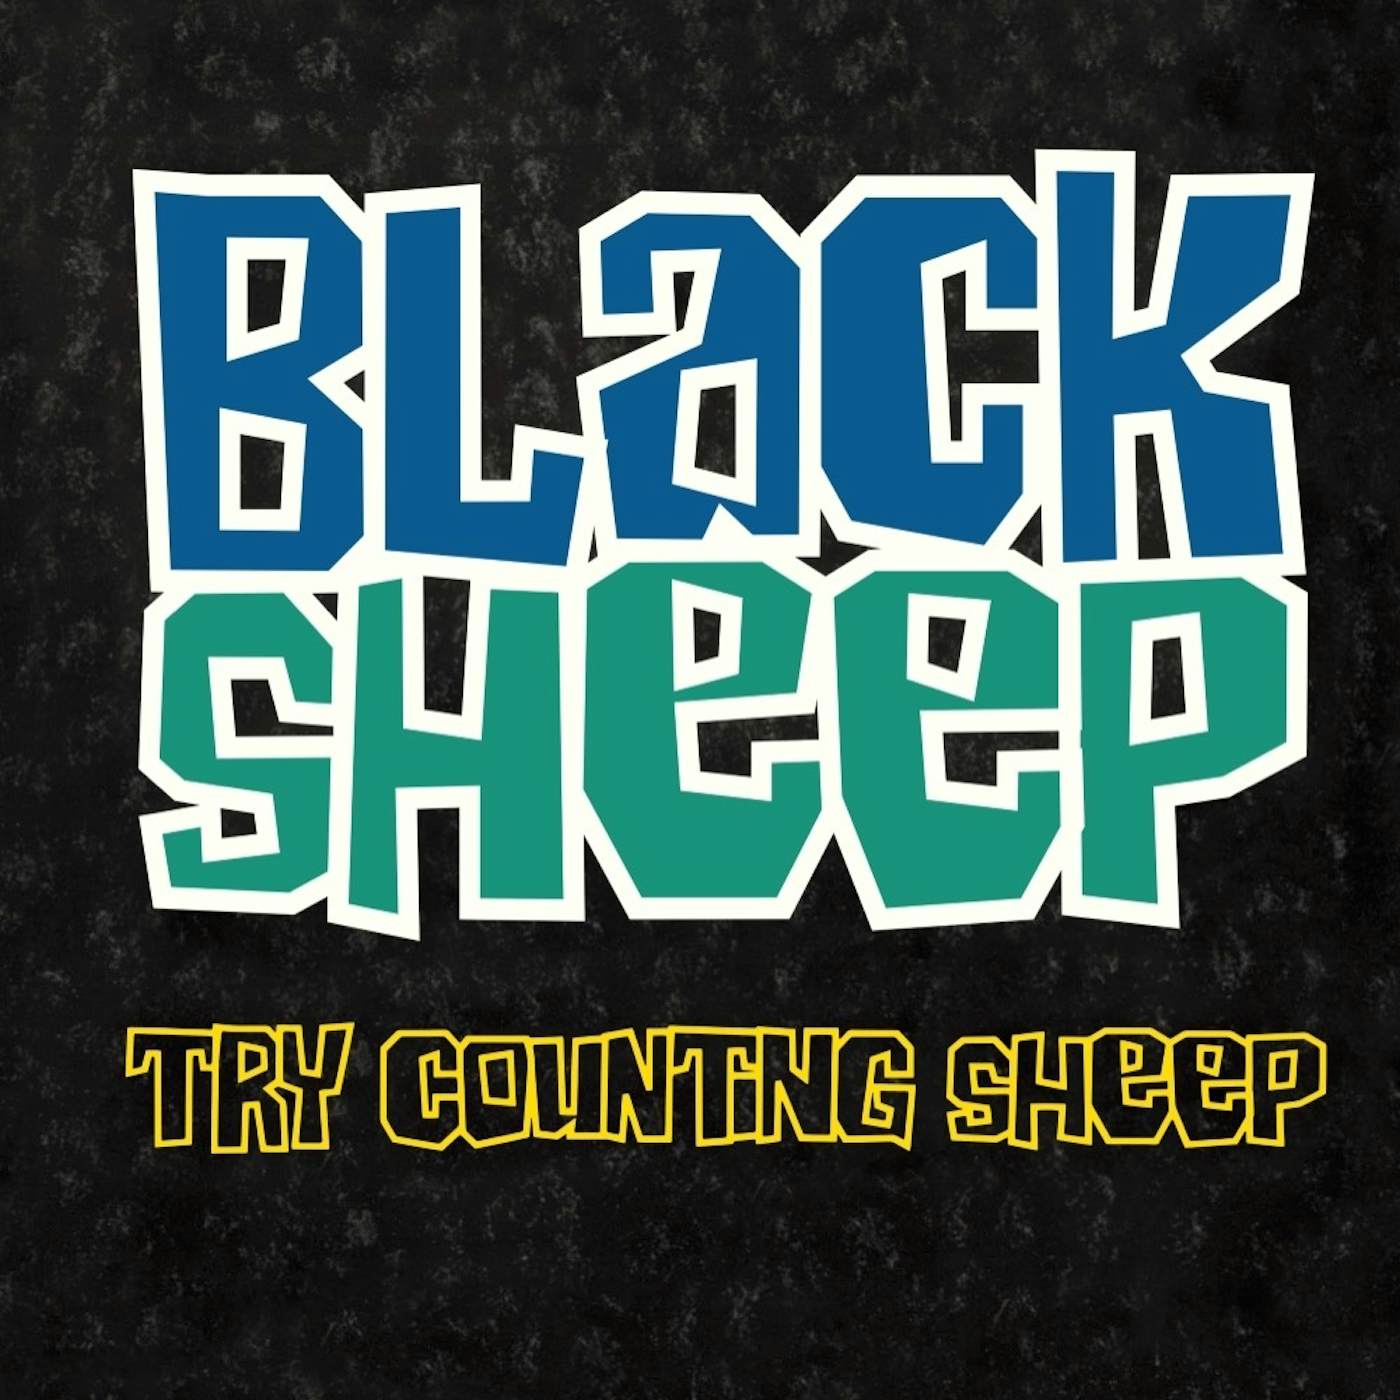 Black Sheep Try Counting Sheep Vinyl Record